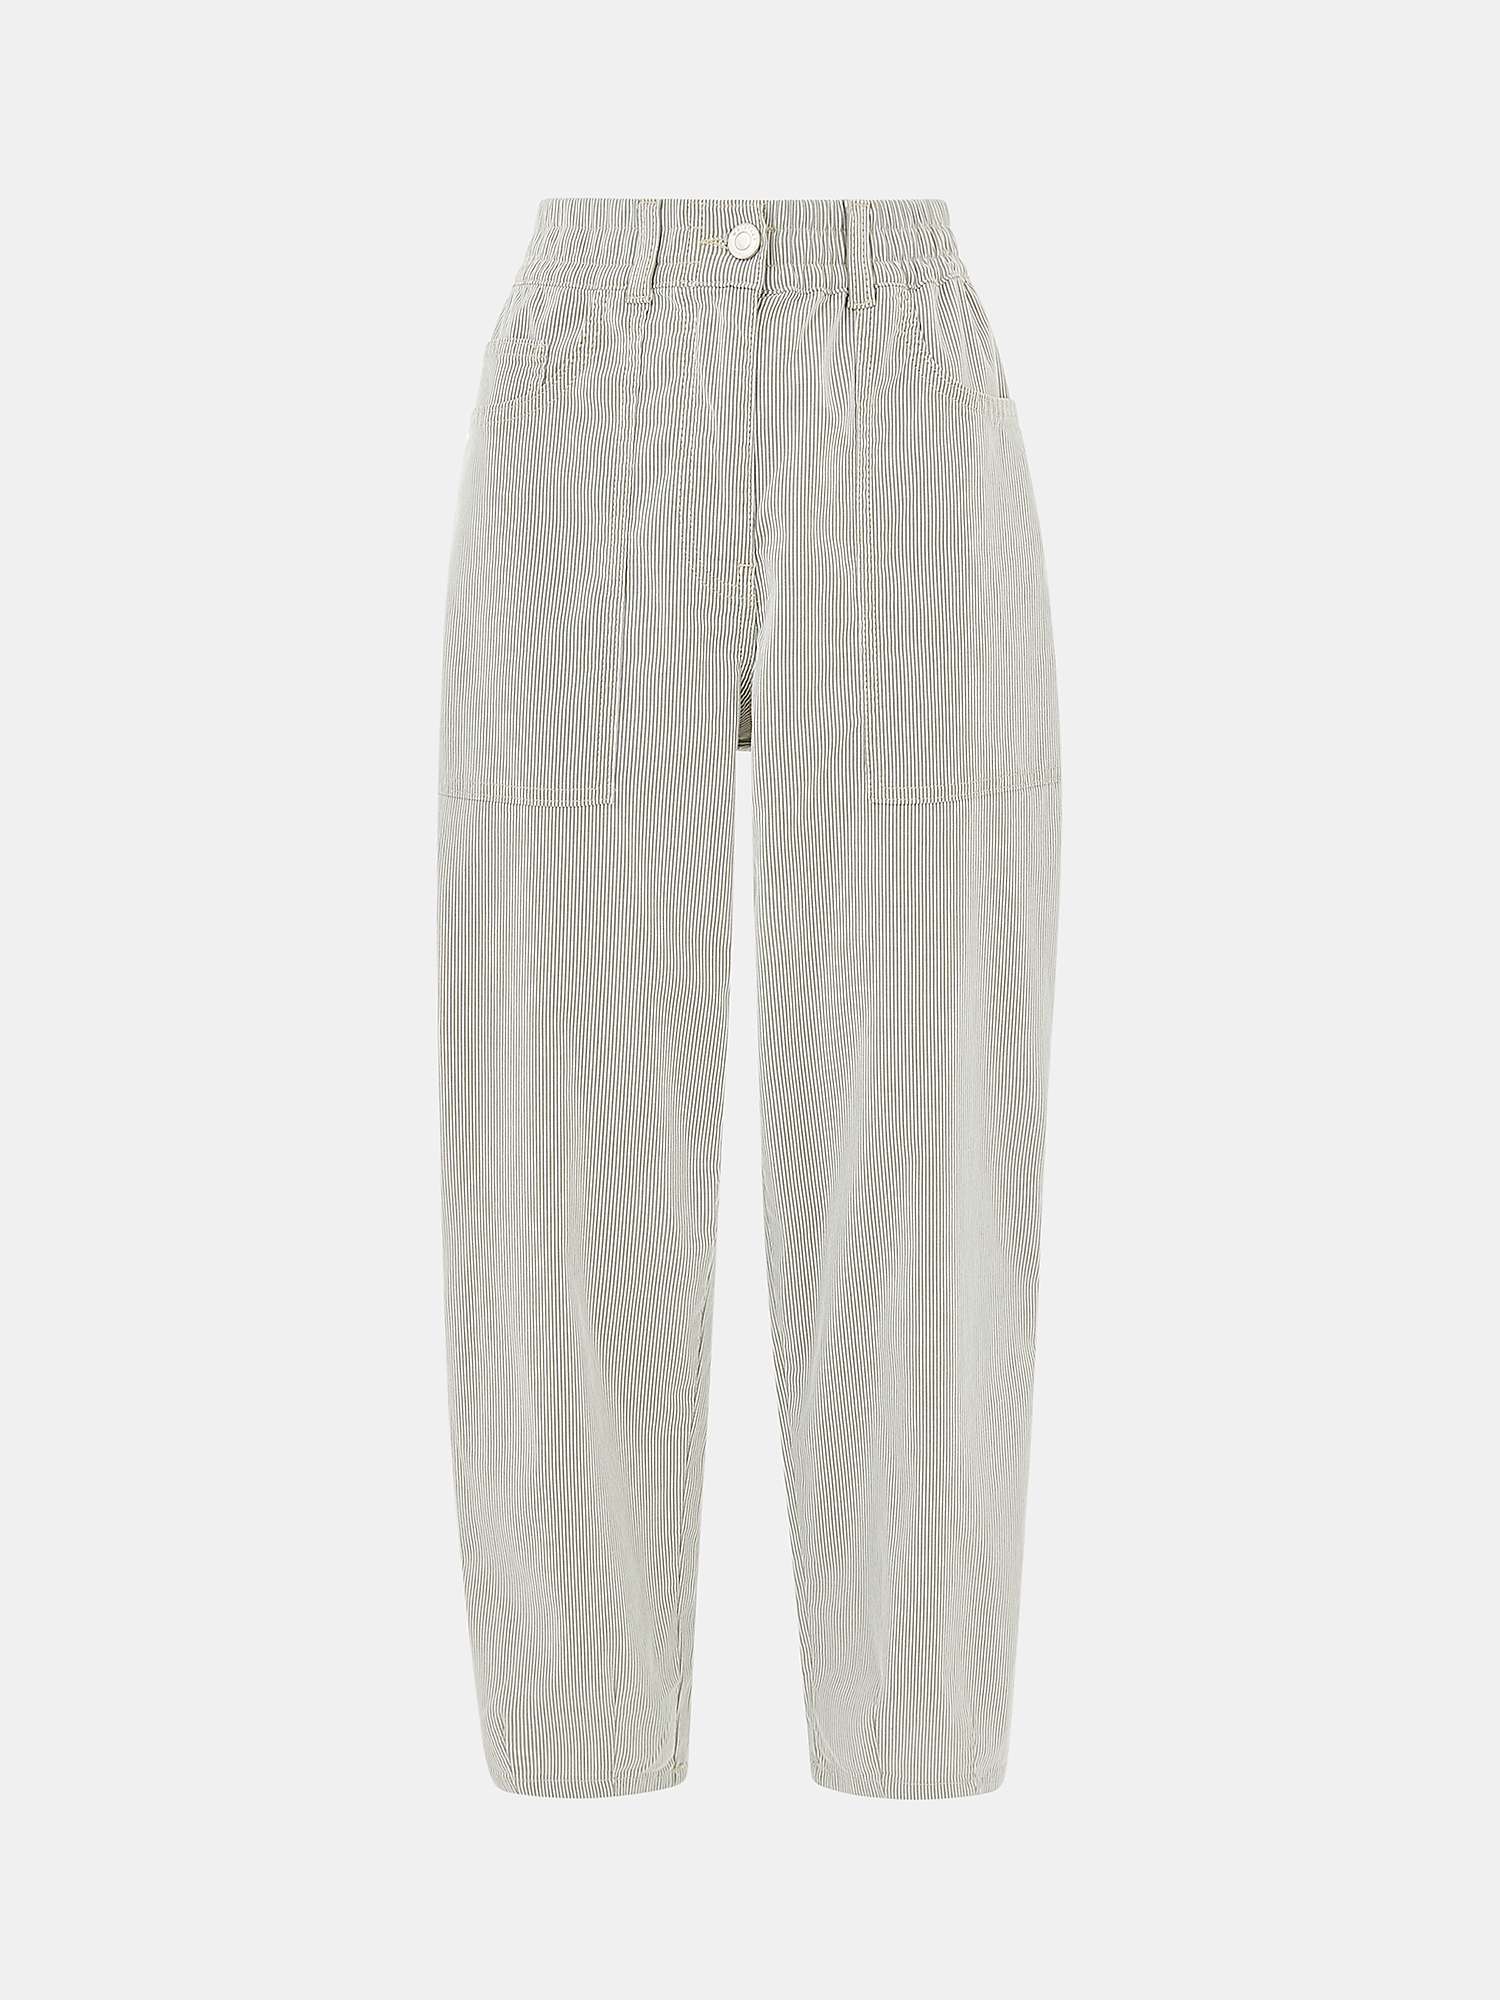 Buy Whistles Petite Tessa Striped Trousers, Cream/Grey Online at johnlewis.com